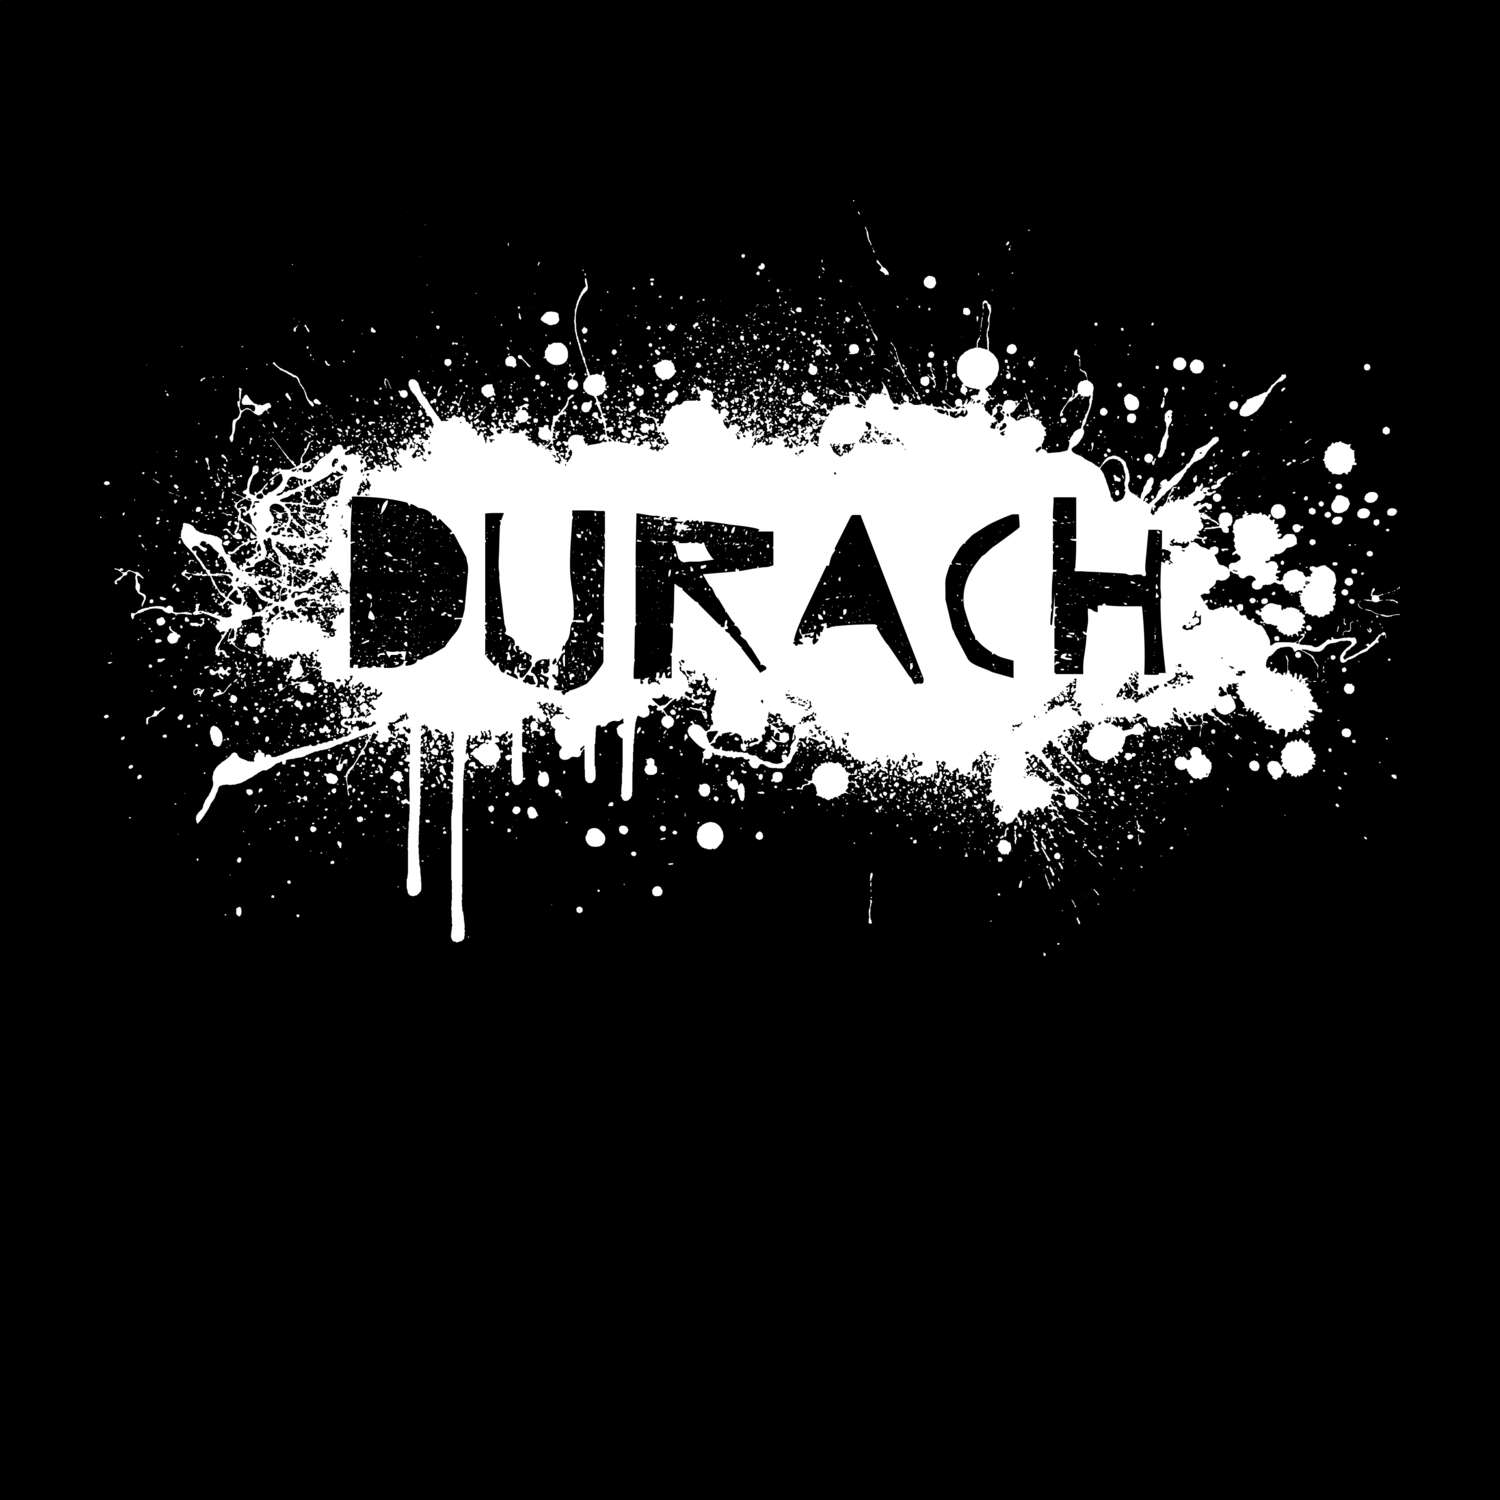 Durach T-Shirt »Paint Splash Punk«